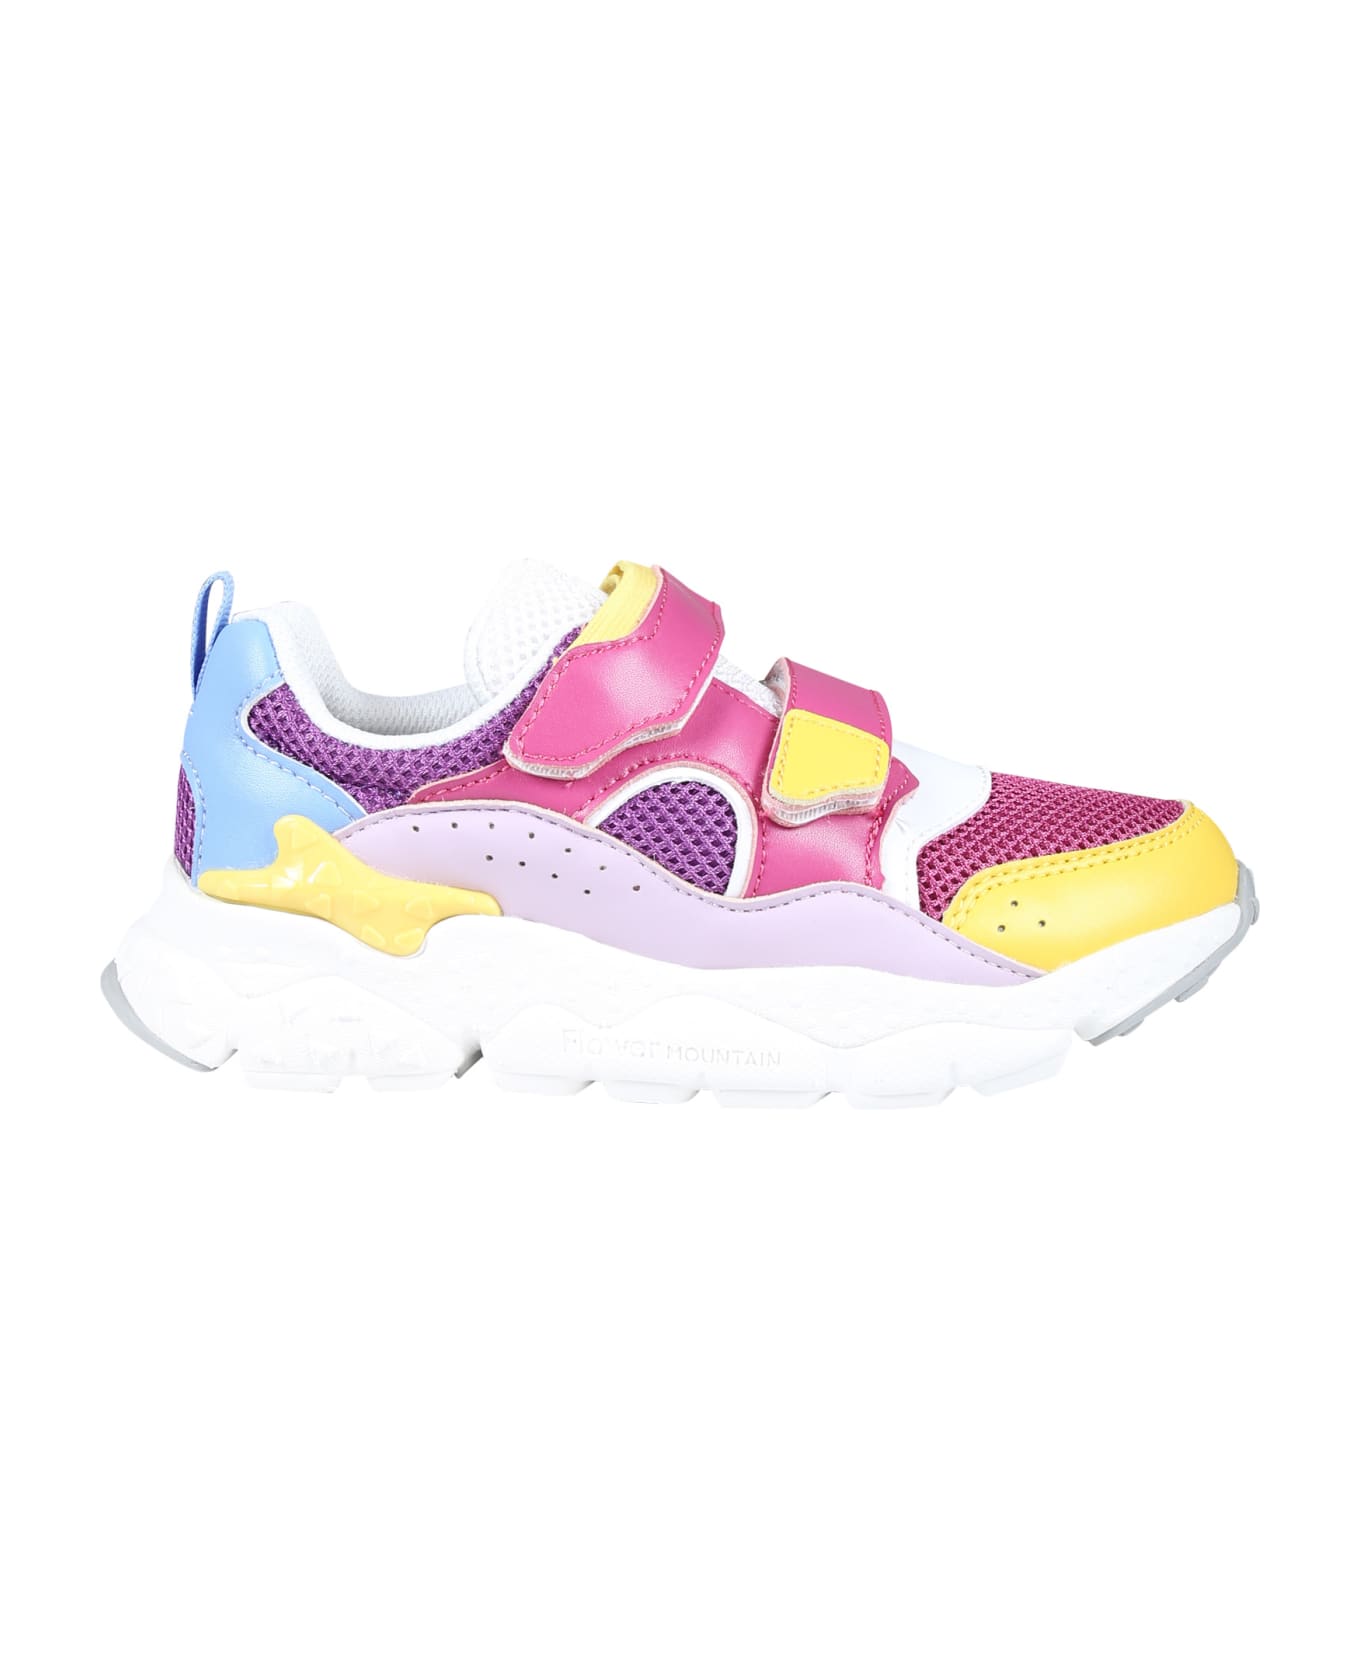 Flower Mountain Multicolor Akio Sneakers For Girl - Multicolor